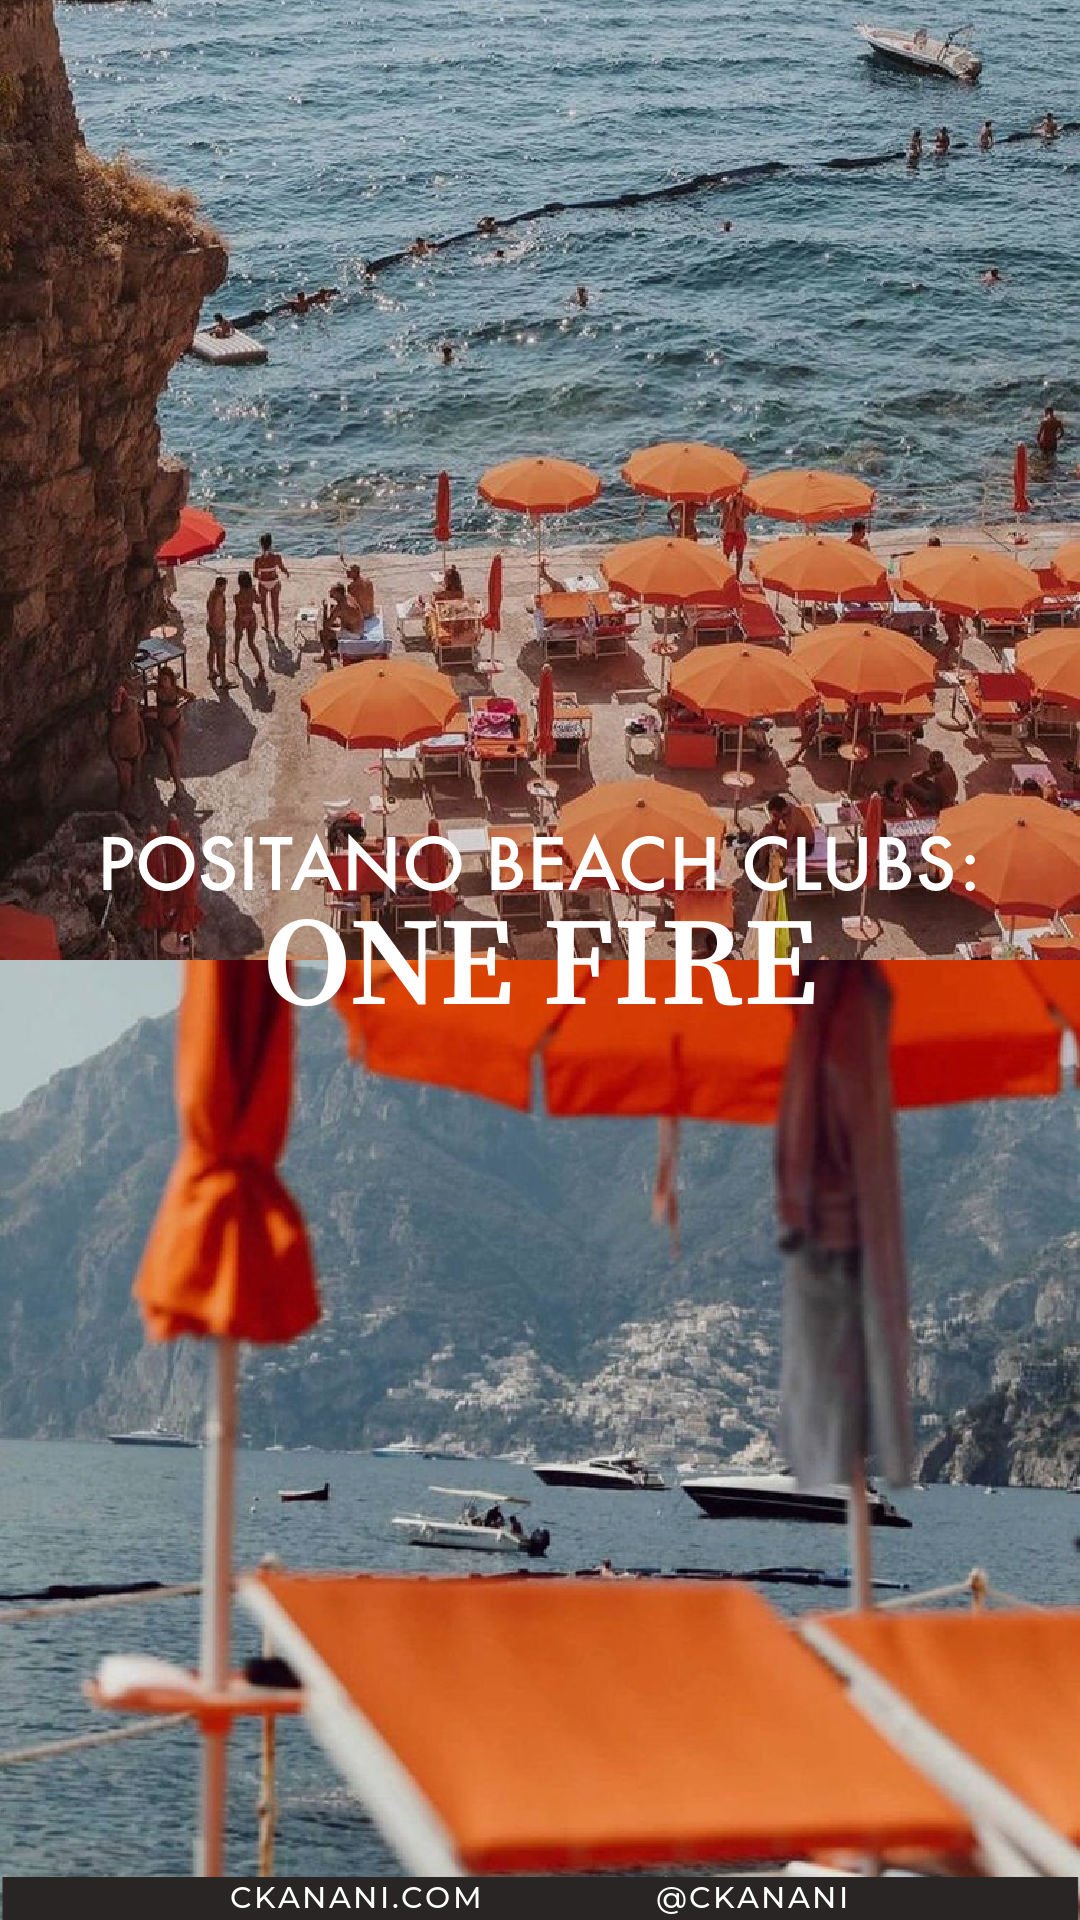 ckanani-beaches-in-positano-beach-clubs-6.jpg